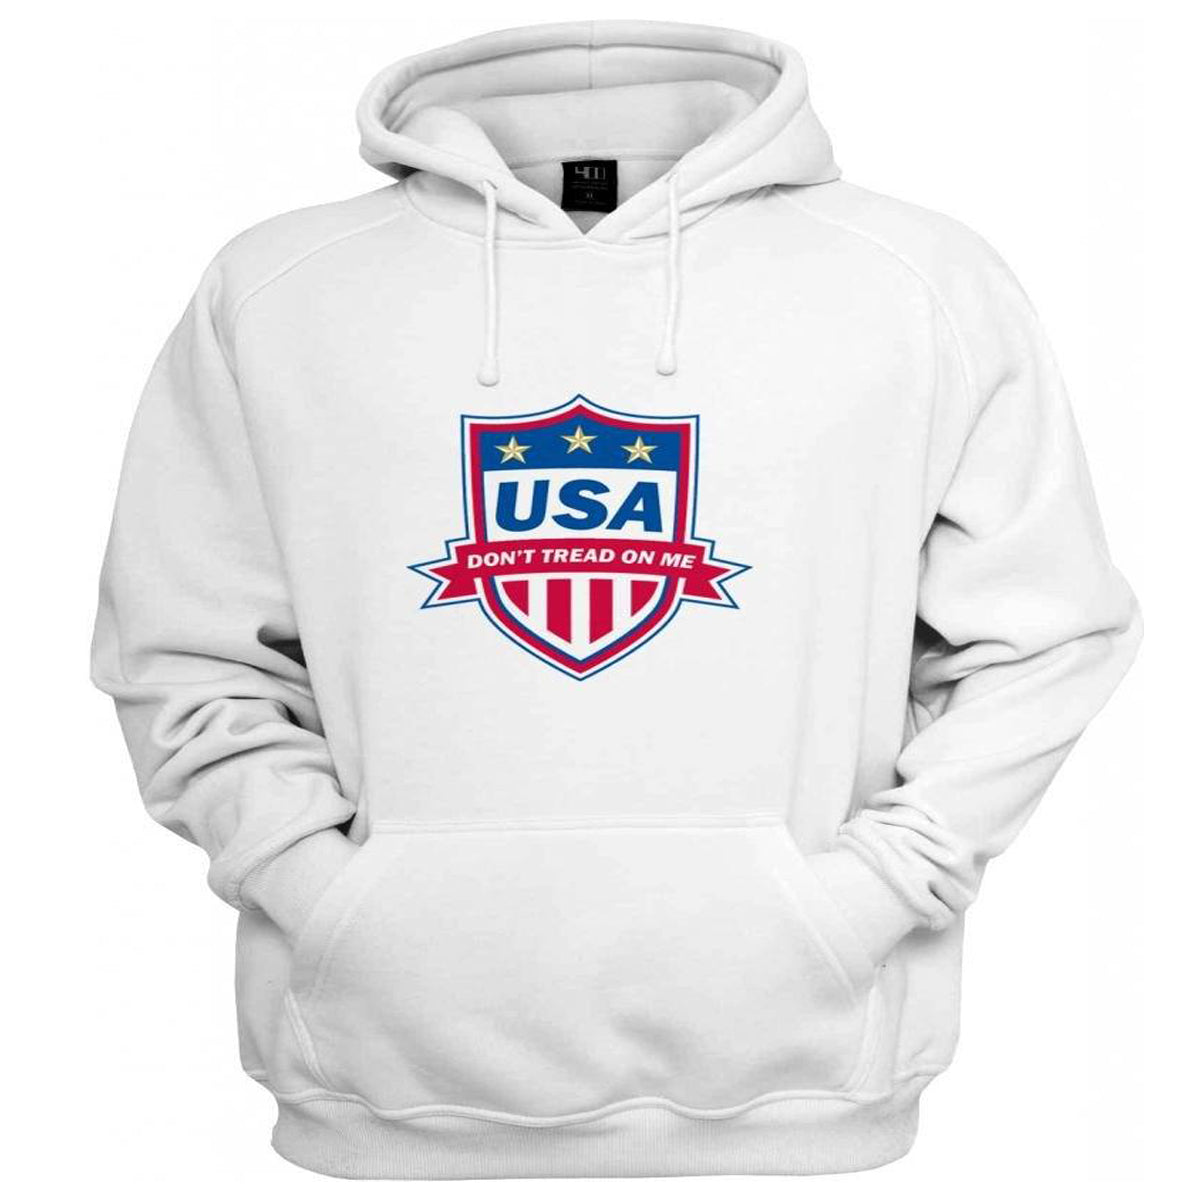 USA Don't Tread on Me Soccer Badge Printed Hooded Sweatshirt Hooded Sweatshirt 411 Adult Small White 